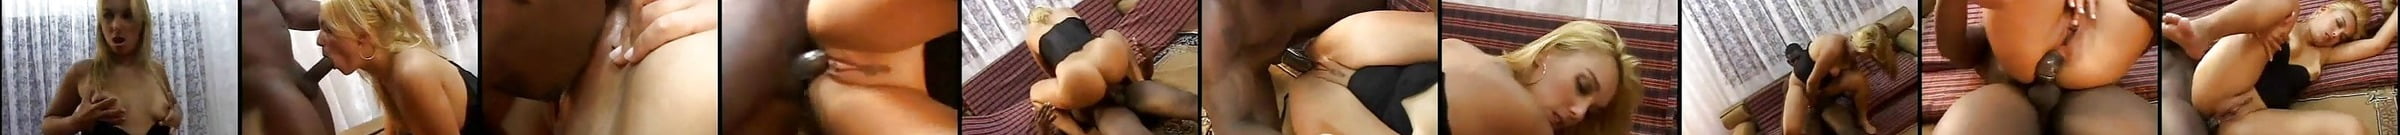 3 Black Dicks Porn Videos Xhamster